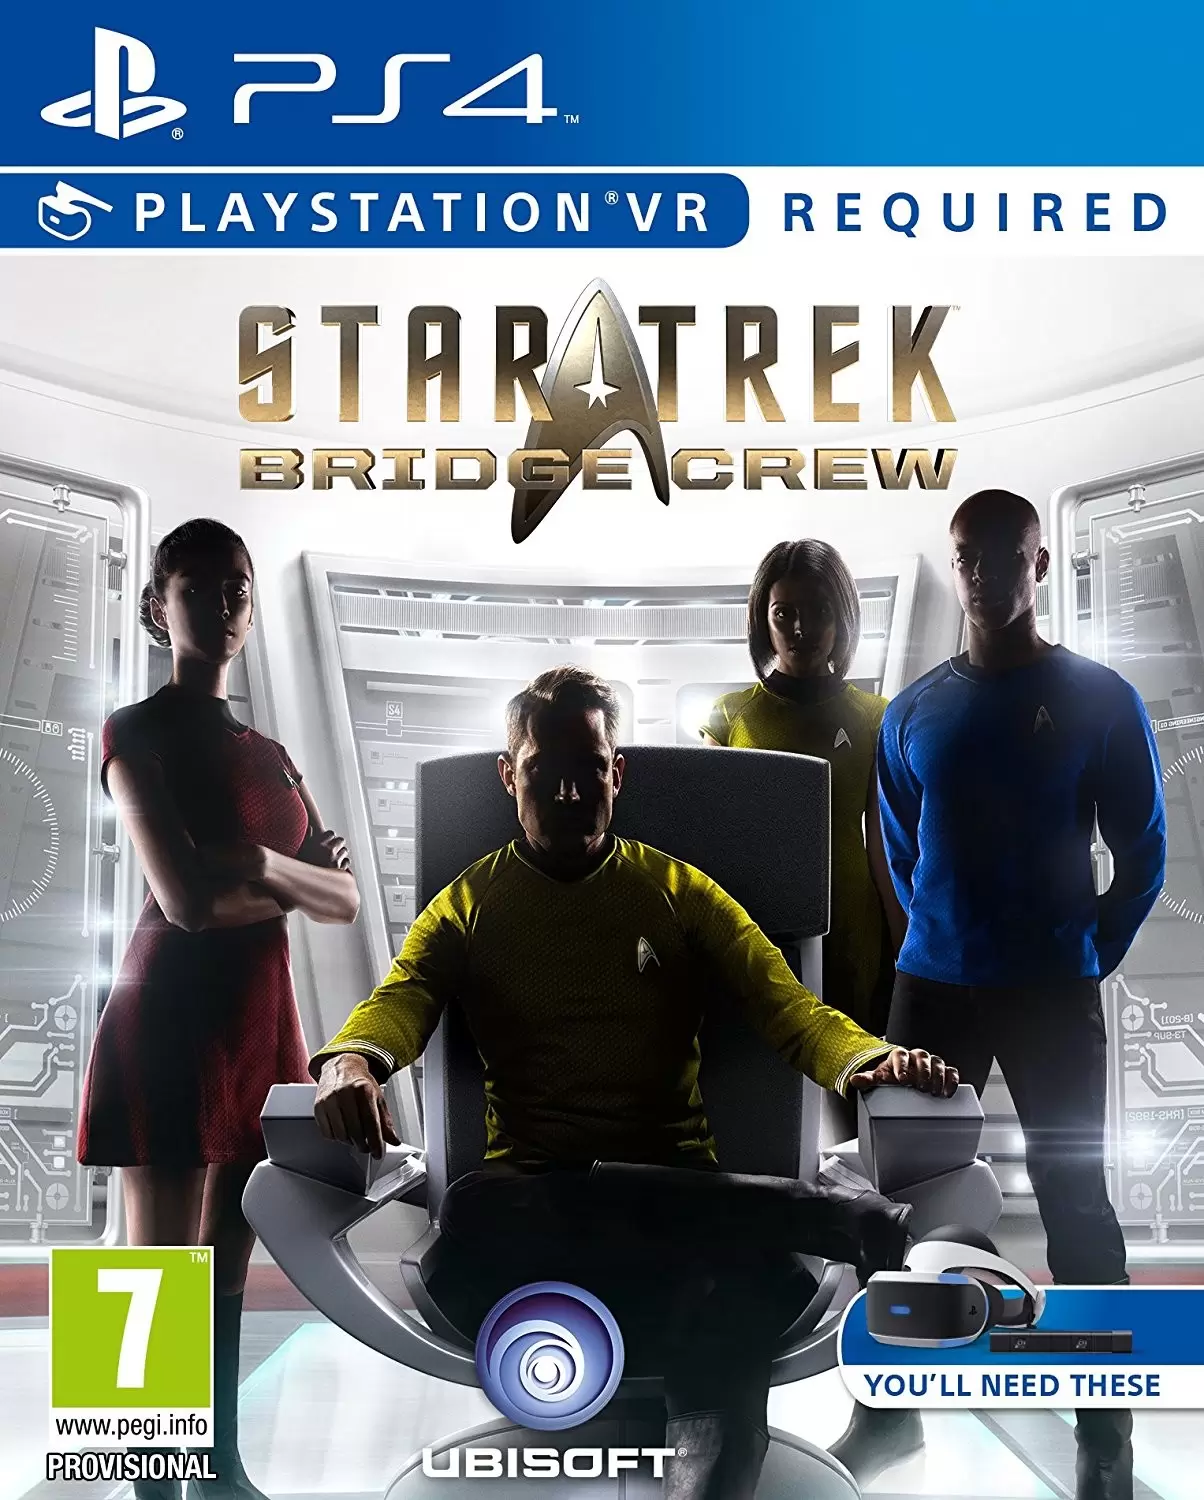 PS4 Games - Star Trek: Bridge Crew